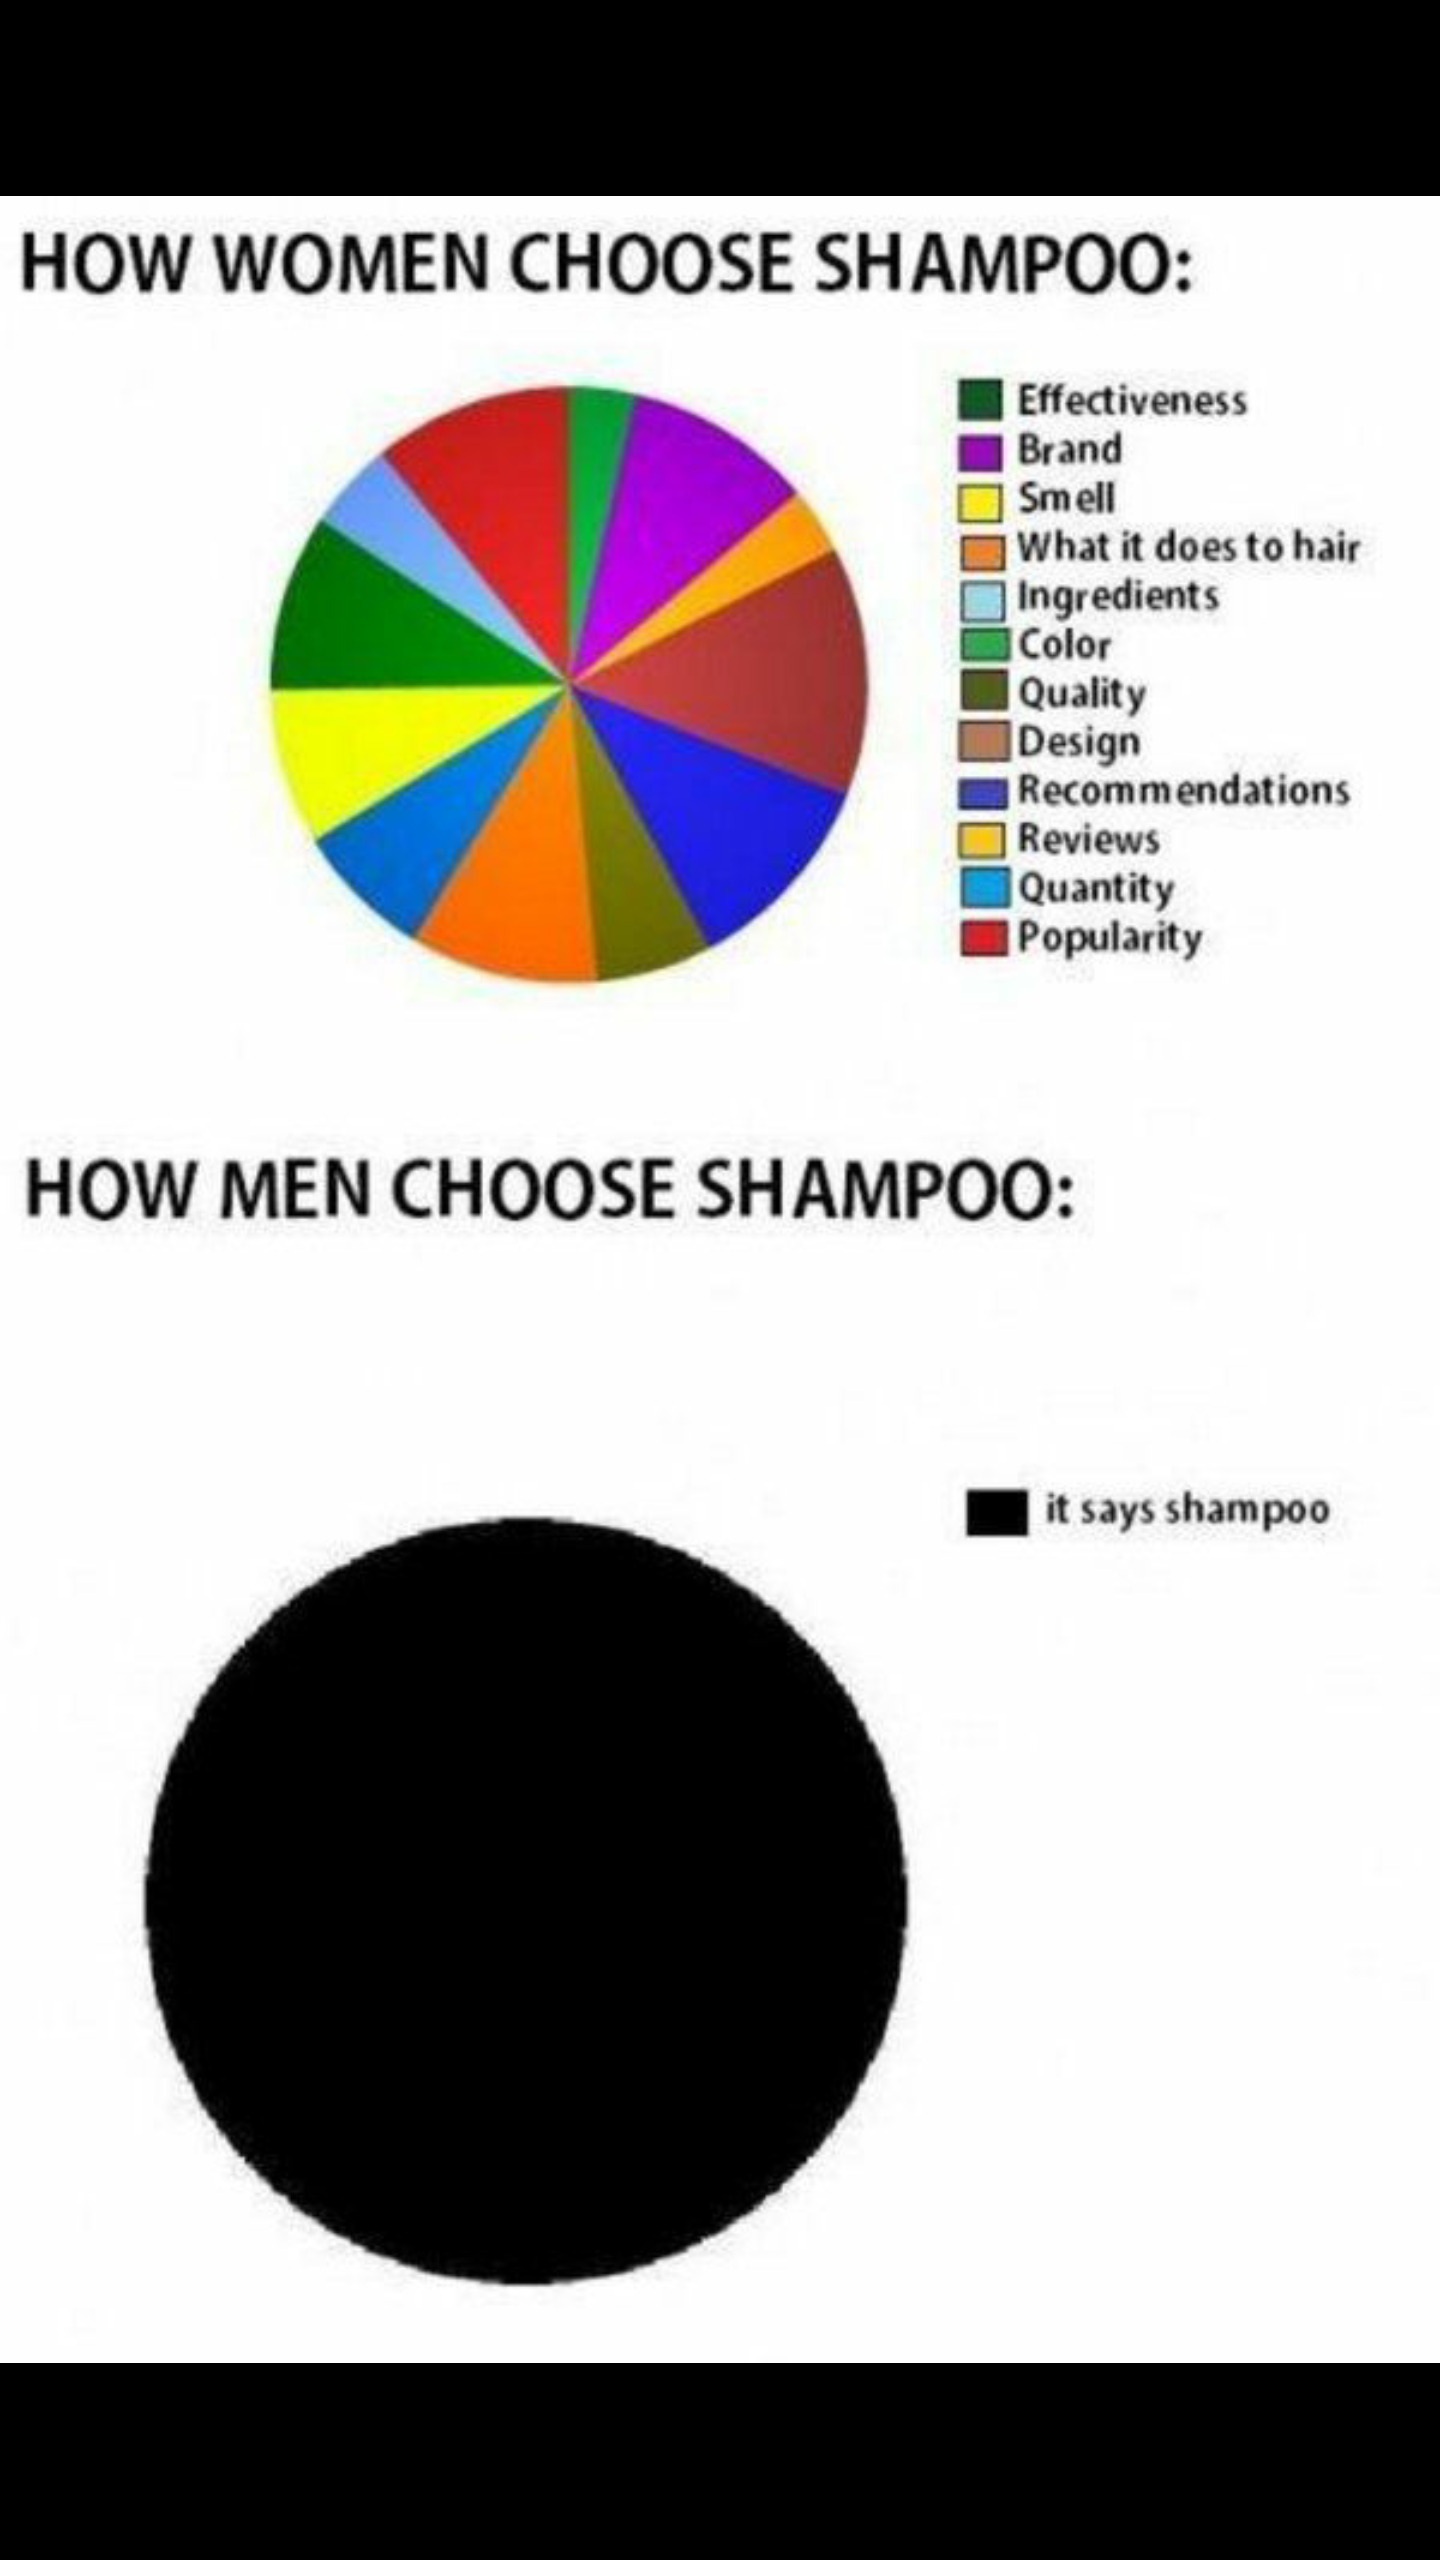 How men choose shampoo.